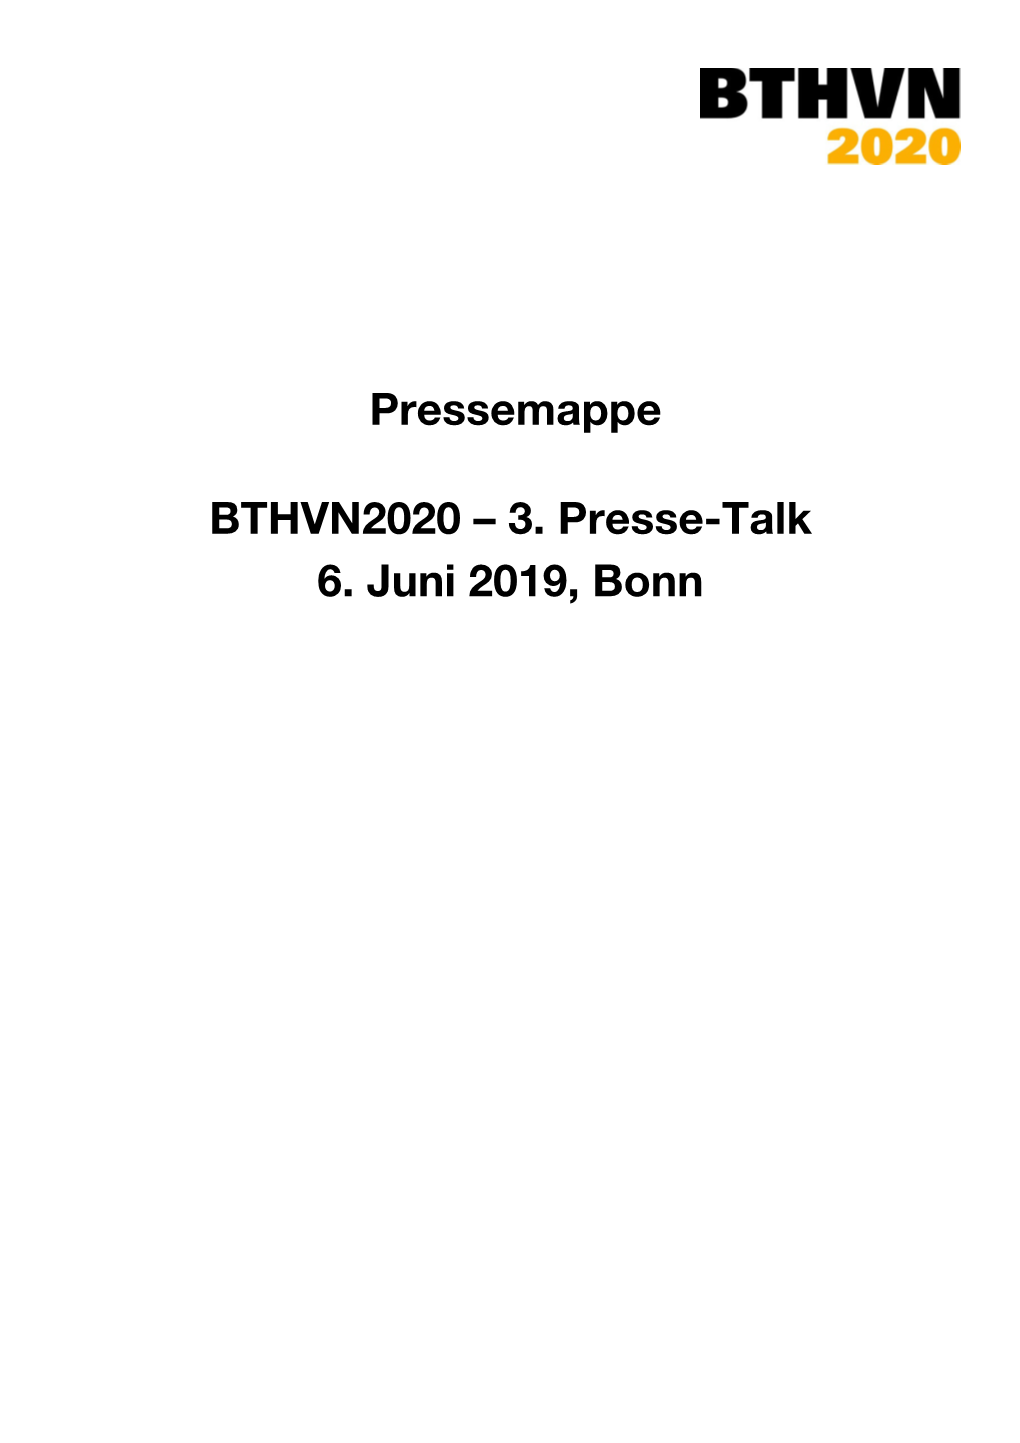 Pressemappe BTHVN2020 – 3. Presse-Talk 6. Juni 2019, Bonn